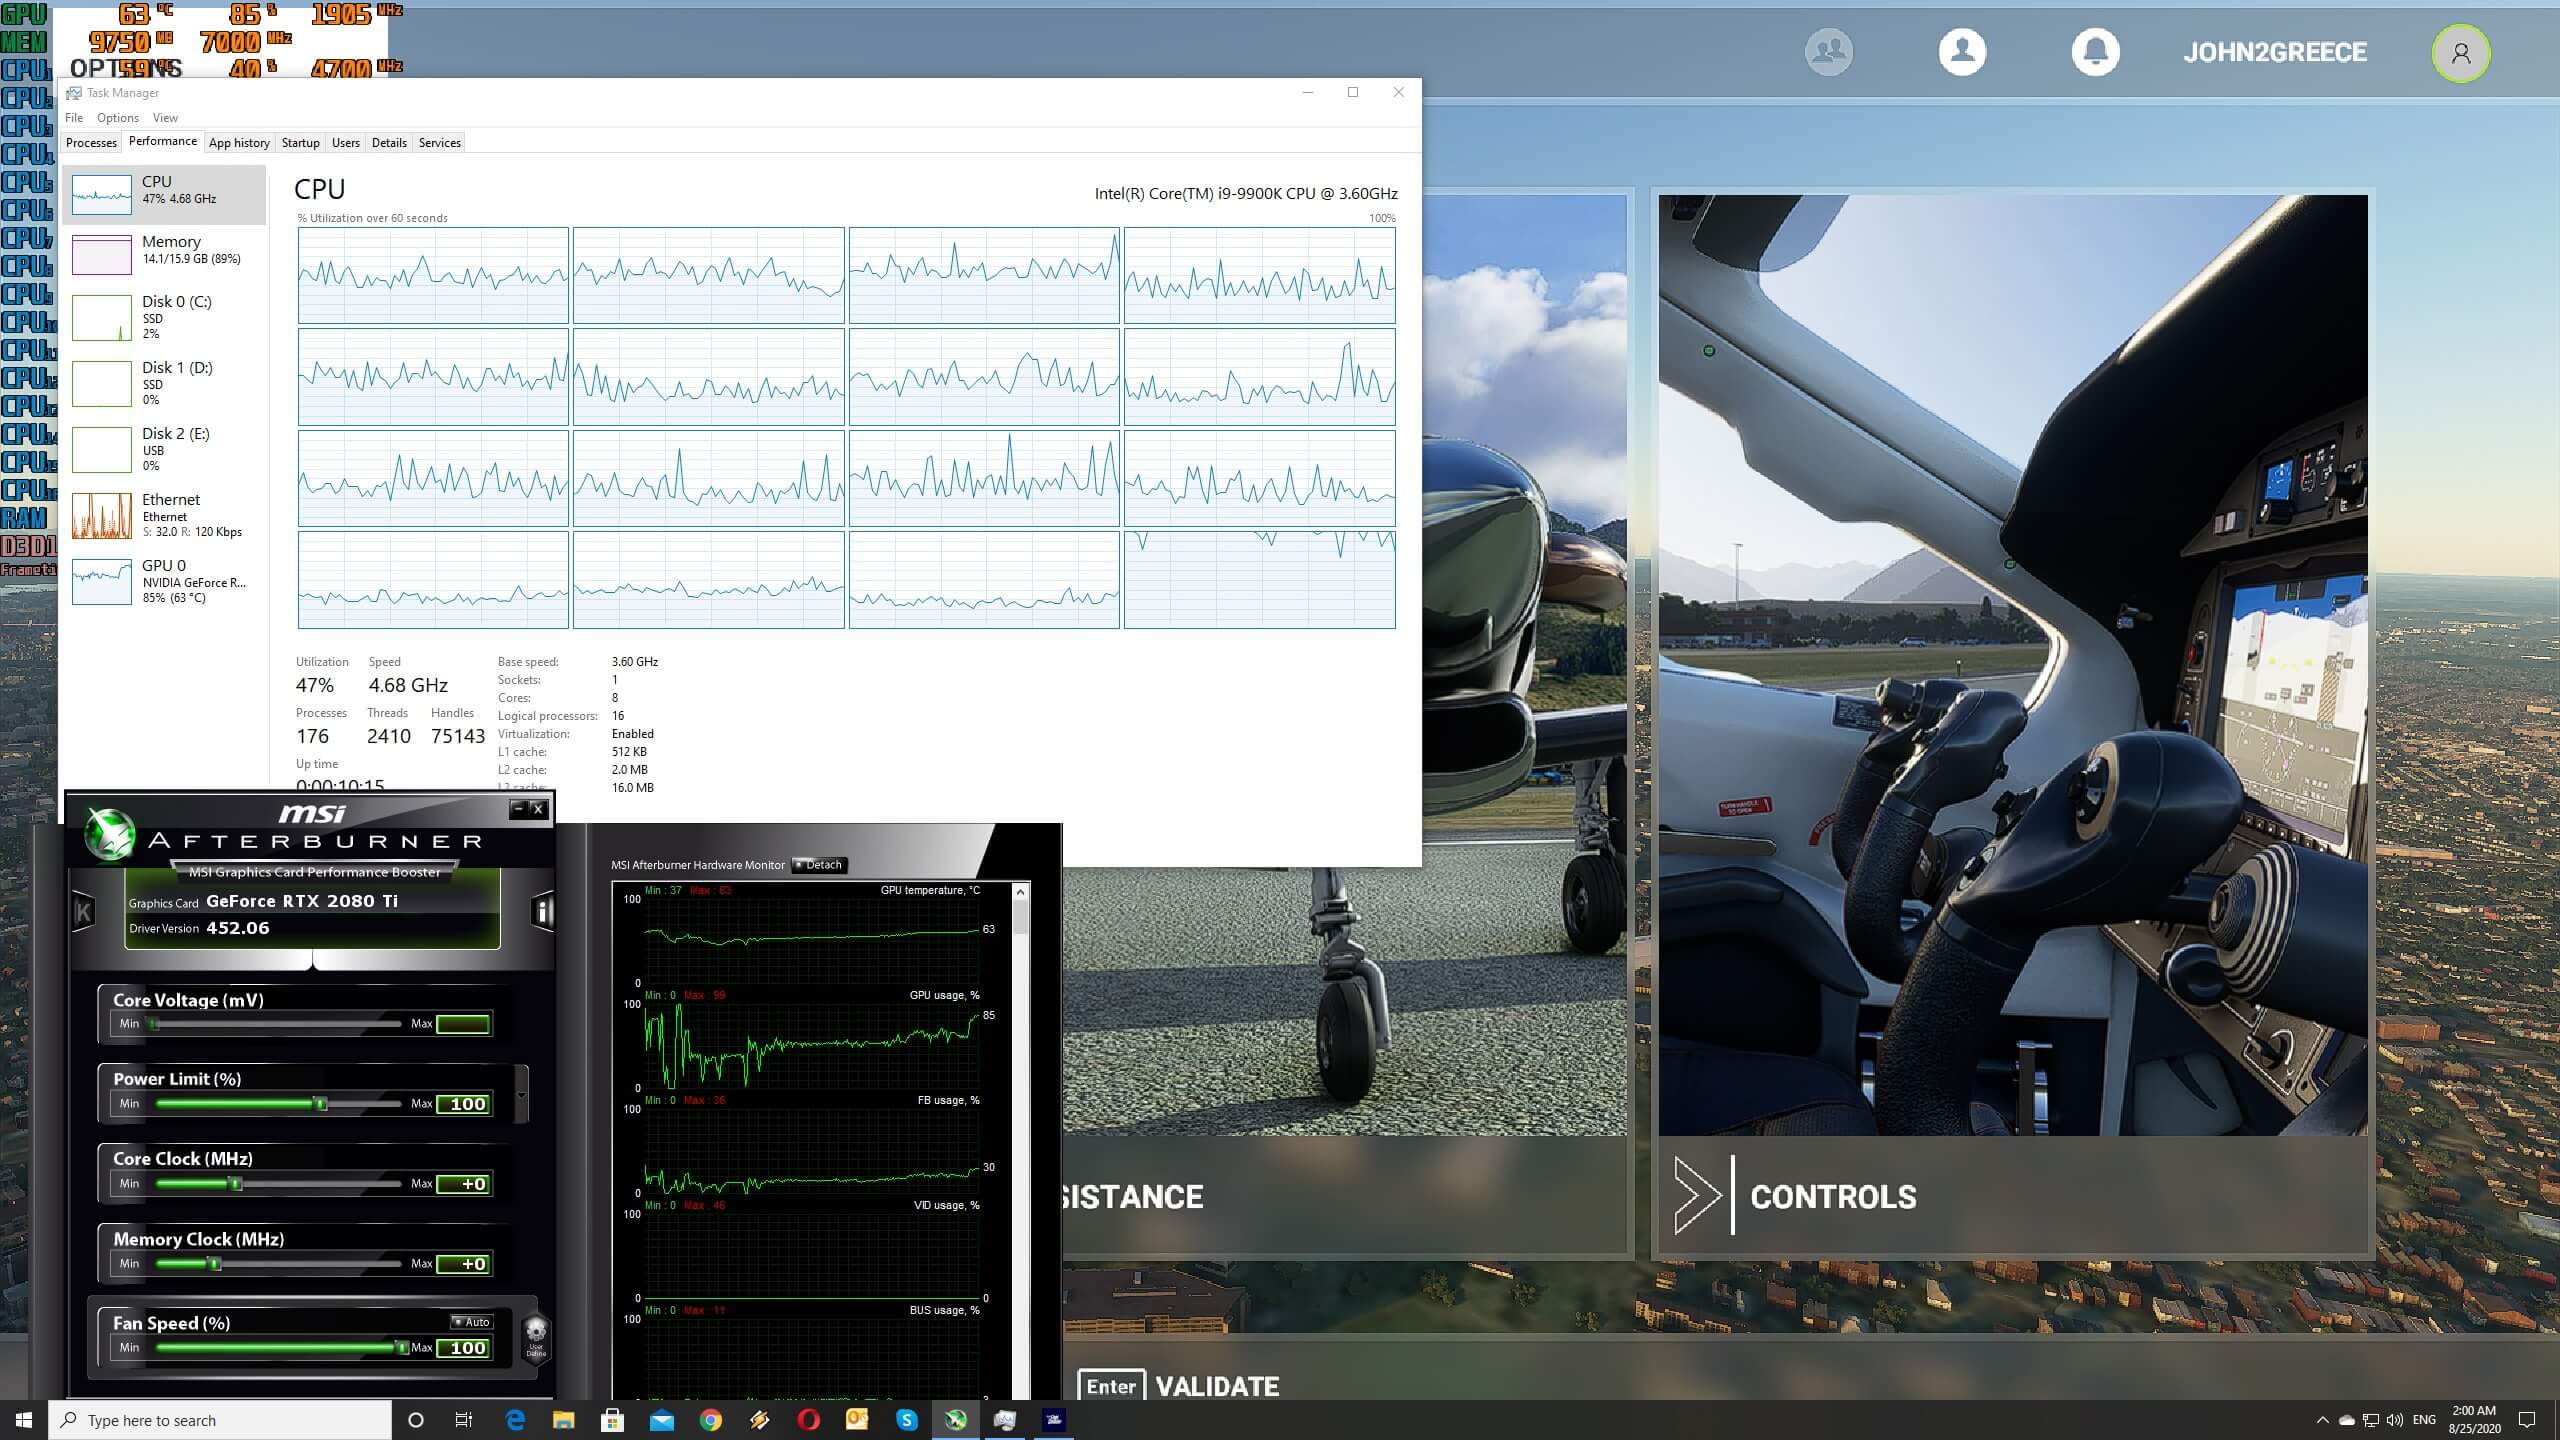 Microsoft Flight Simulator 2020 system requirements: Can my PC run it?